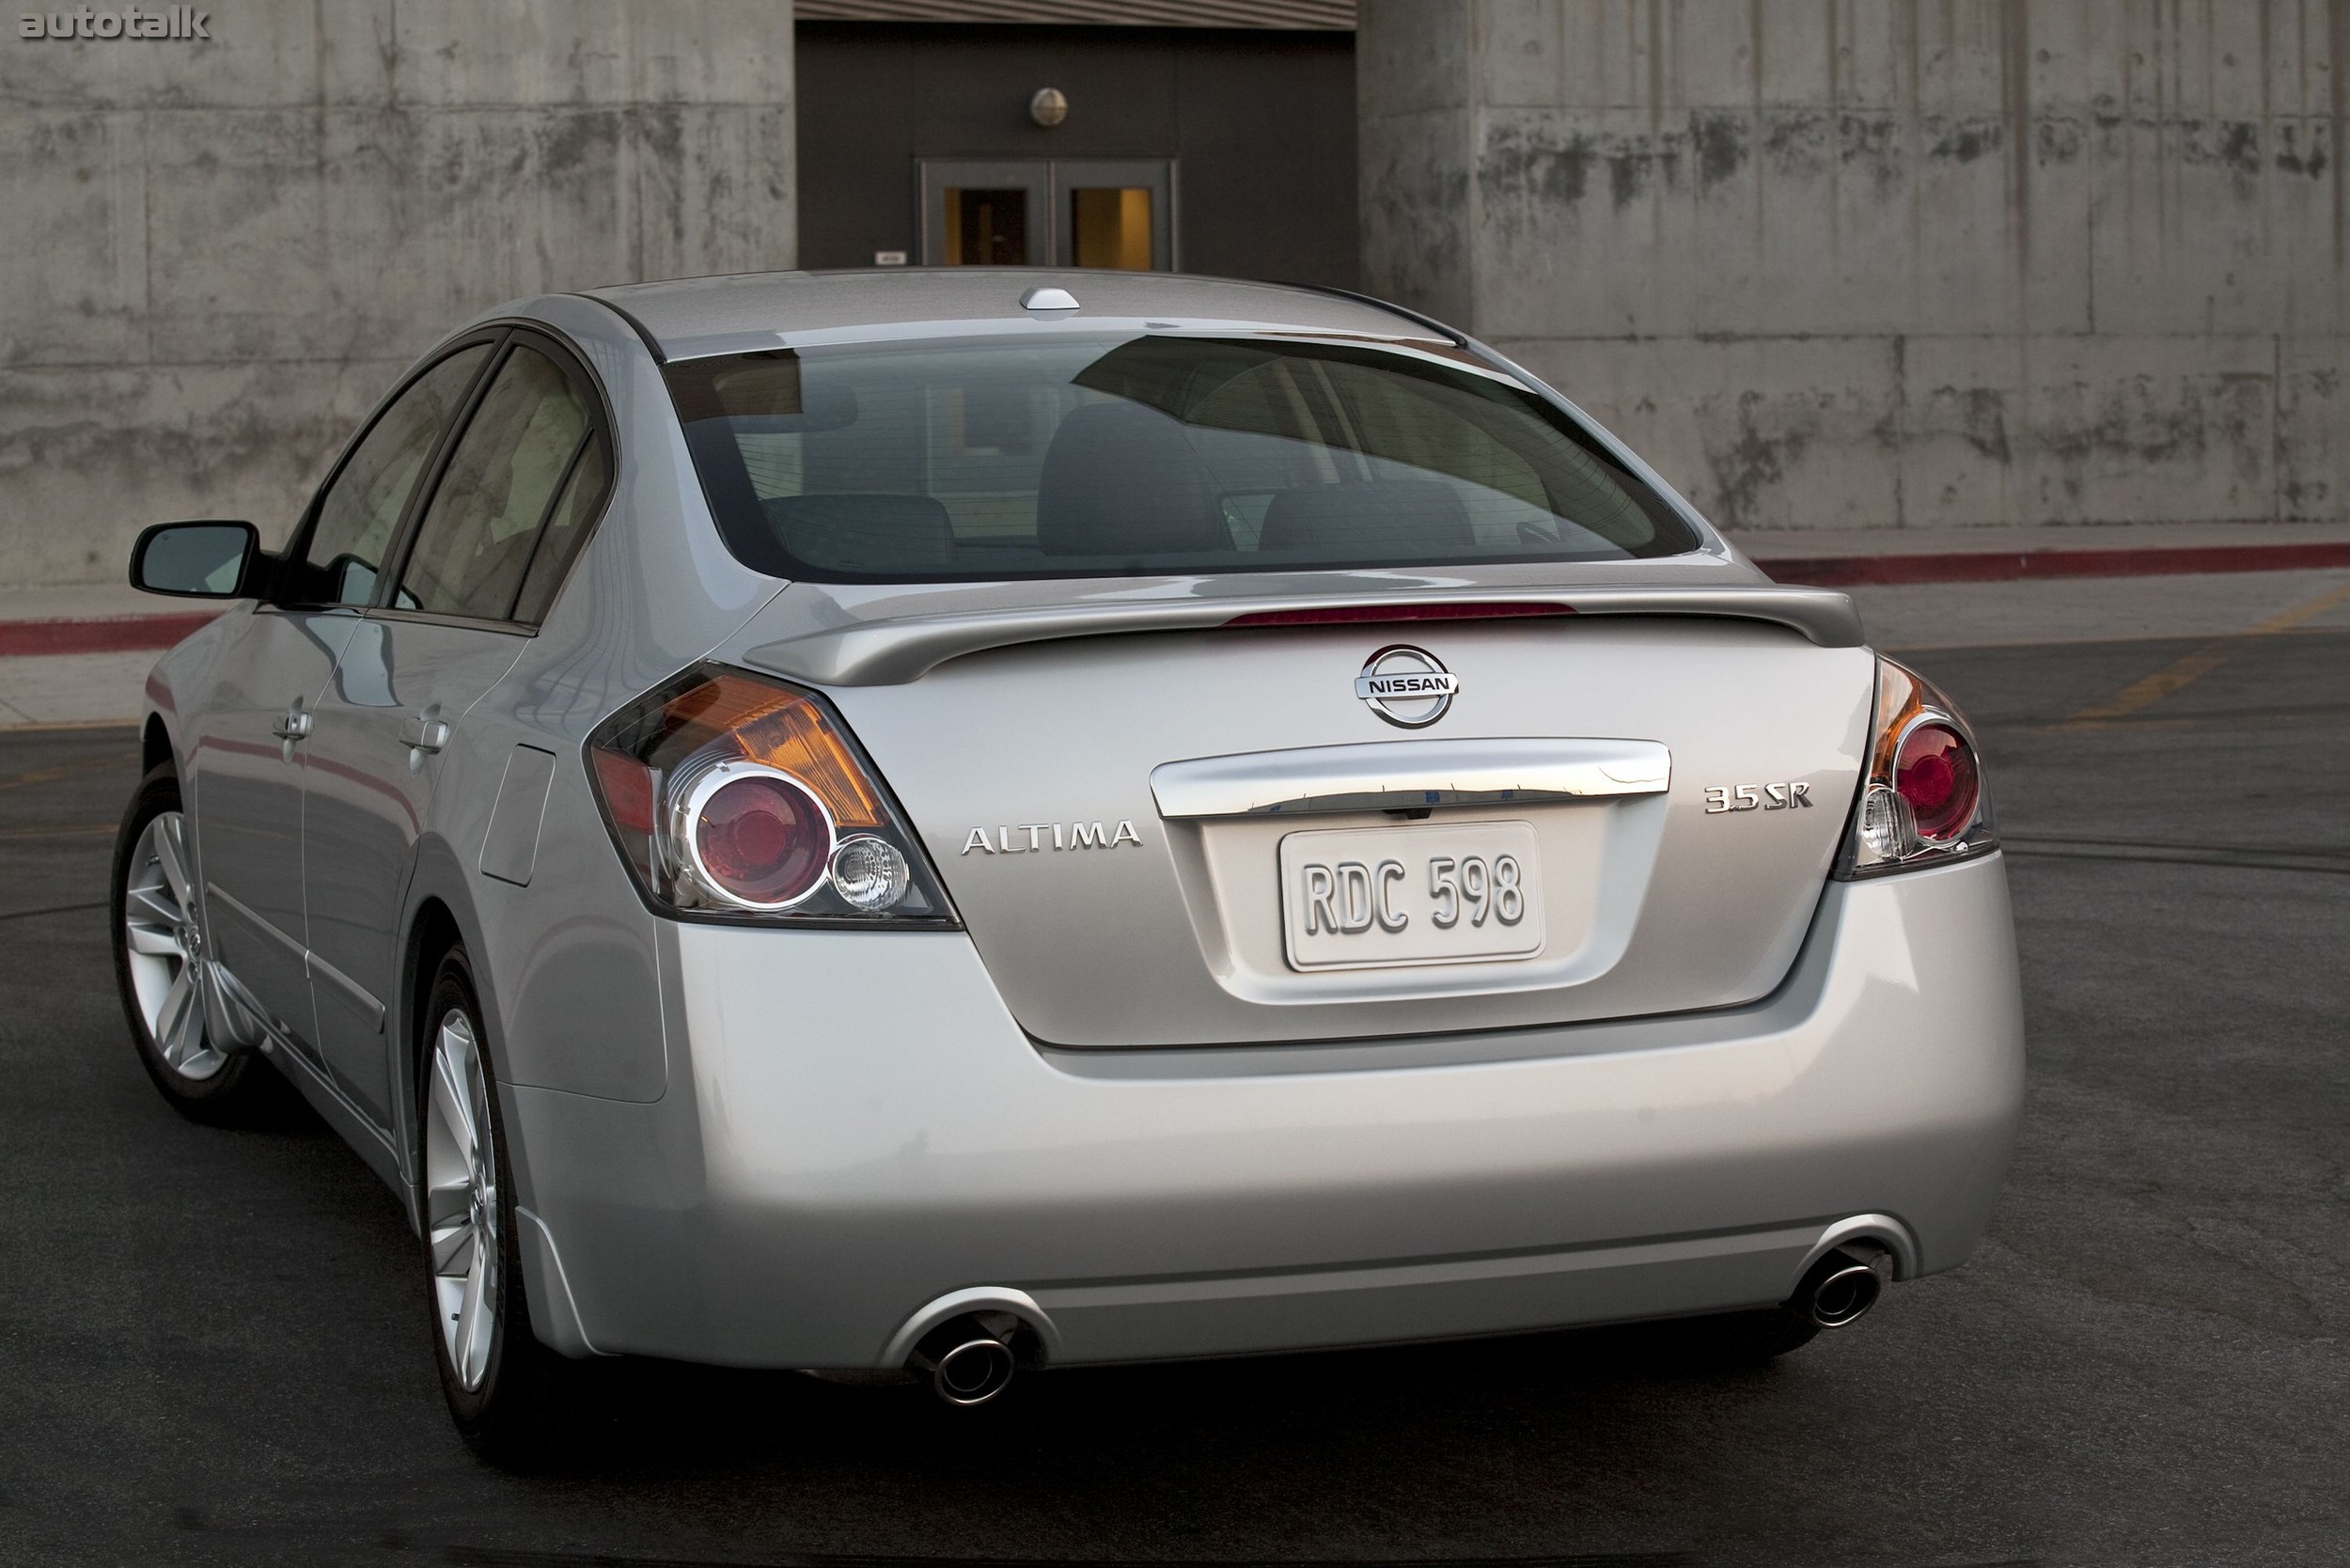 2010 Nissan Altima Sedan